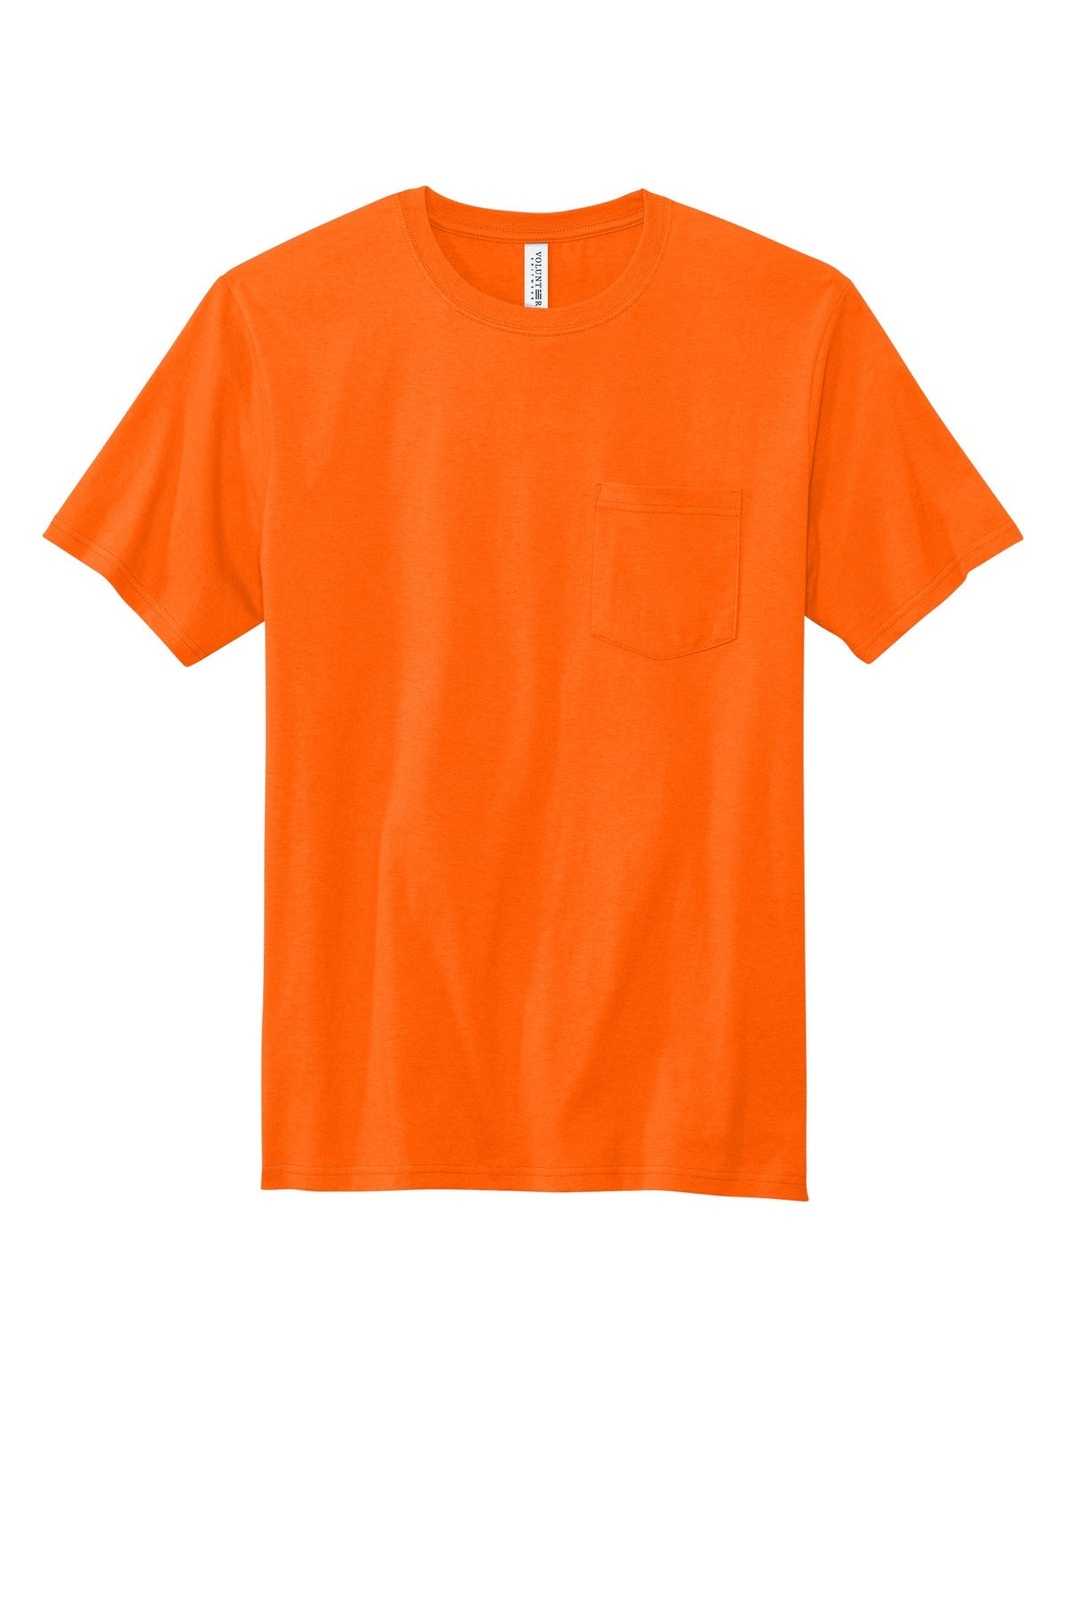 Volunteer Knitwear VL100P All-American Pocket Tee - Safety Orange - HIT a Double - 1